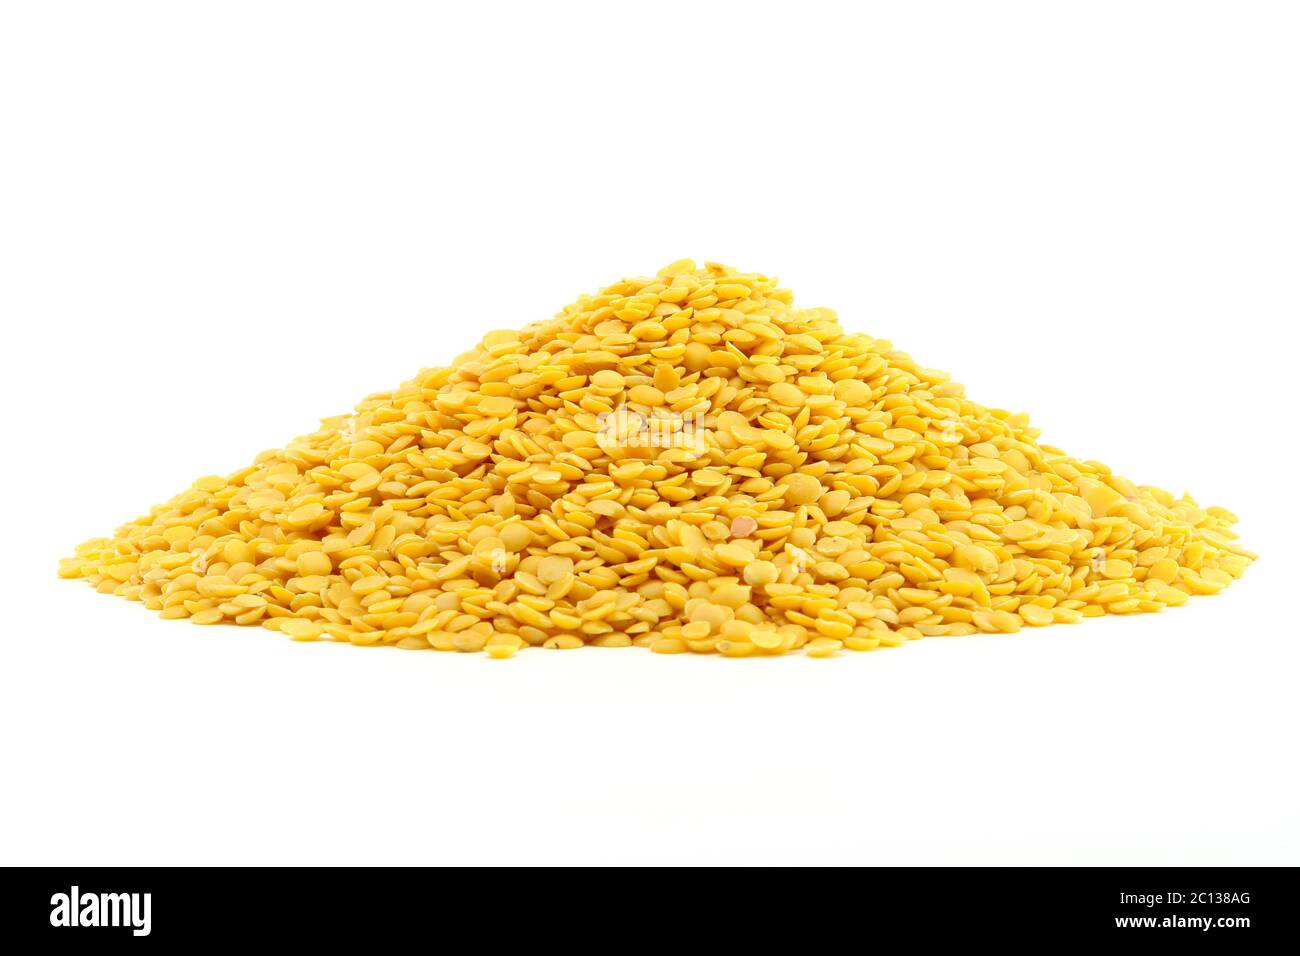 Yellow Lentils on white background Stock Photo